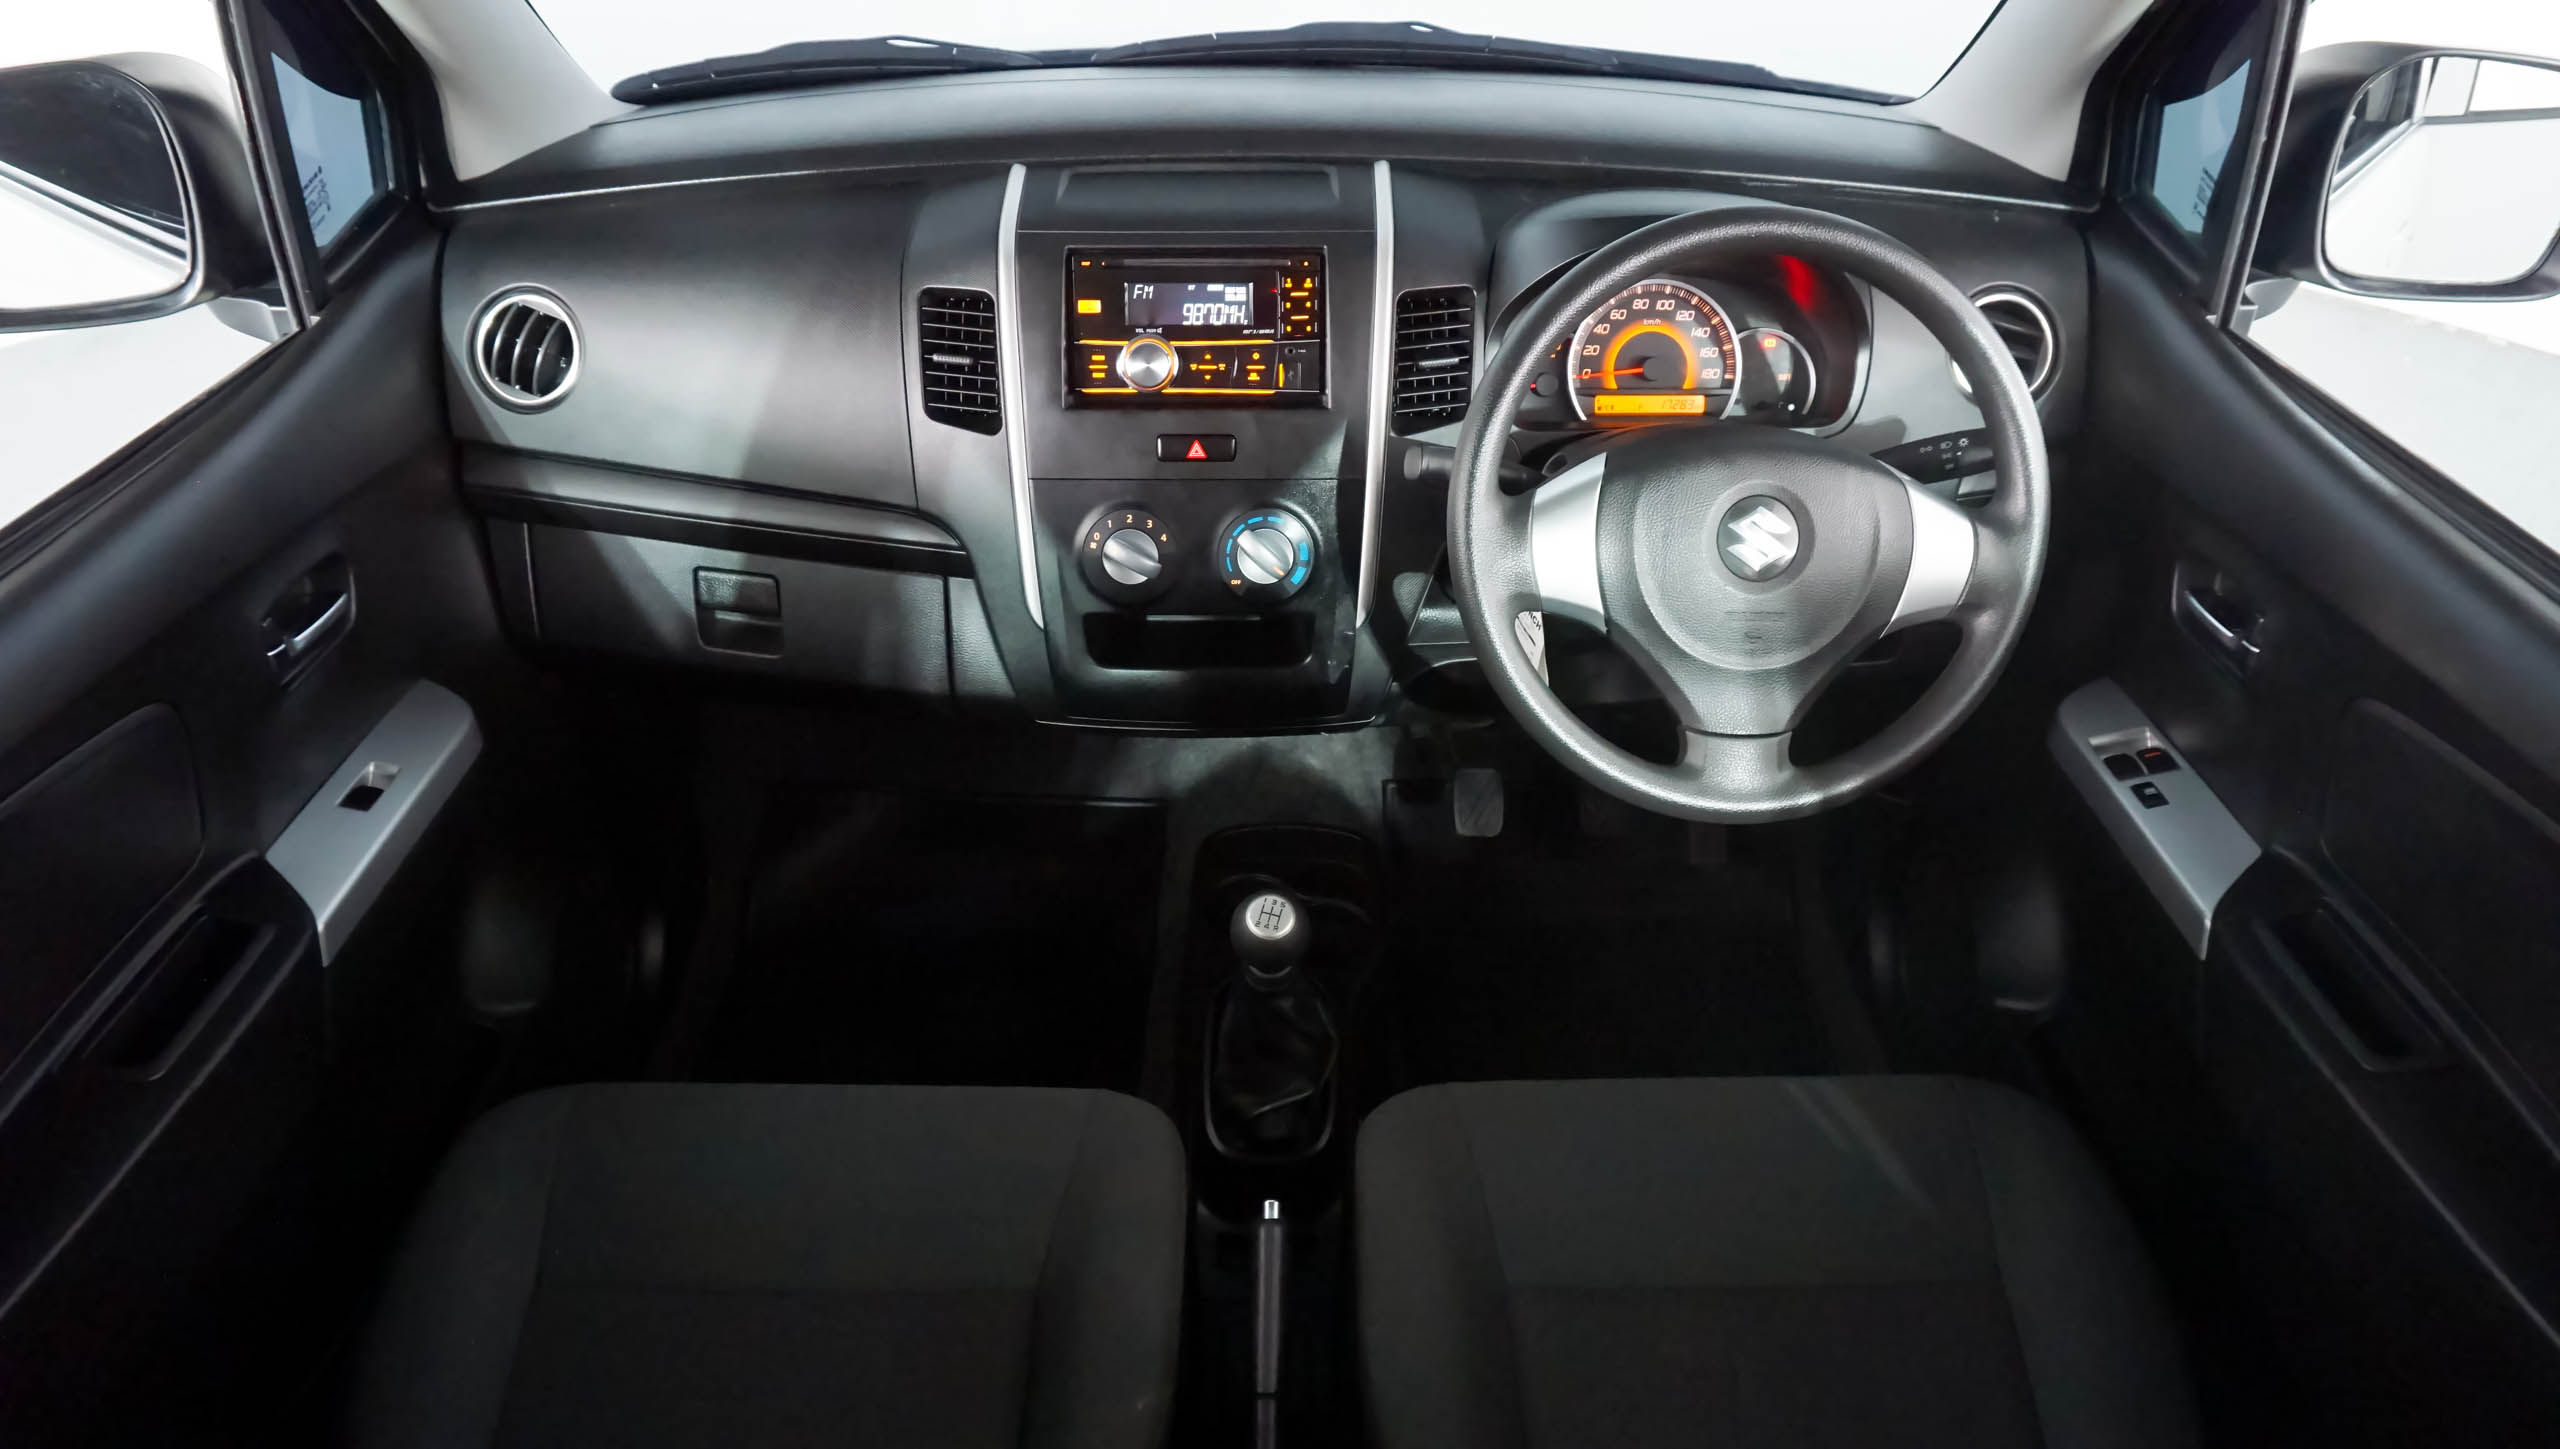 Dijual 2019 Suzuki Karimun Wagon R GS GS Bekas